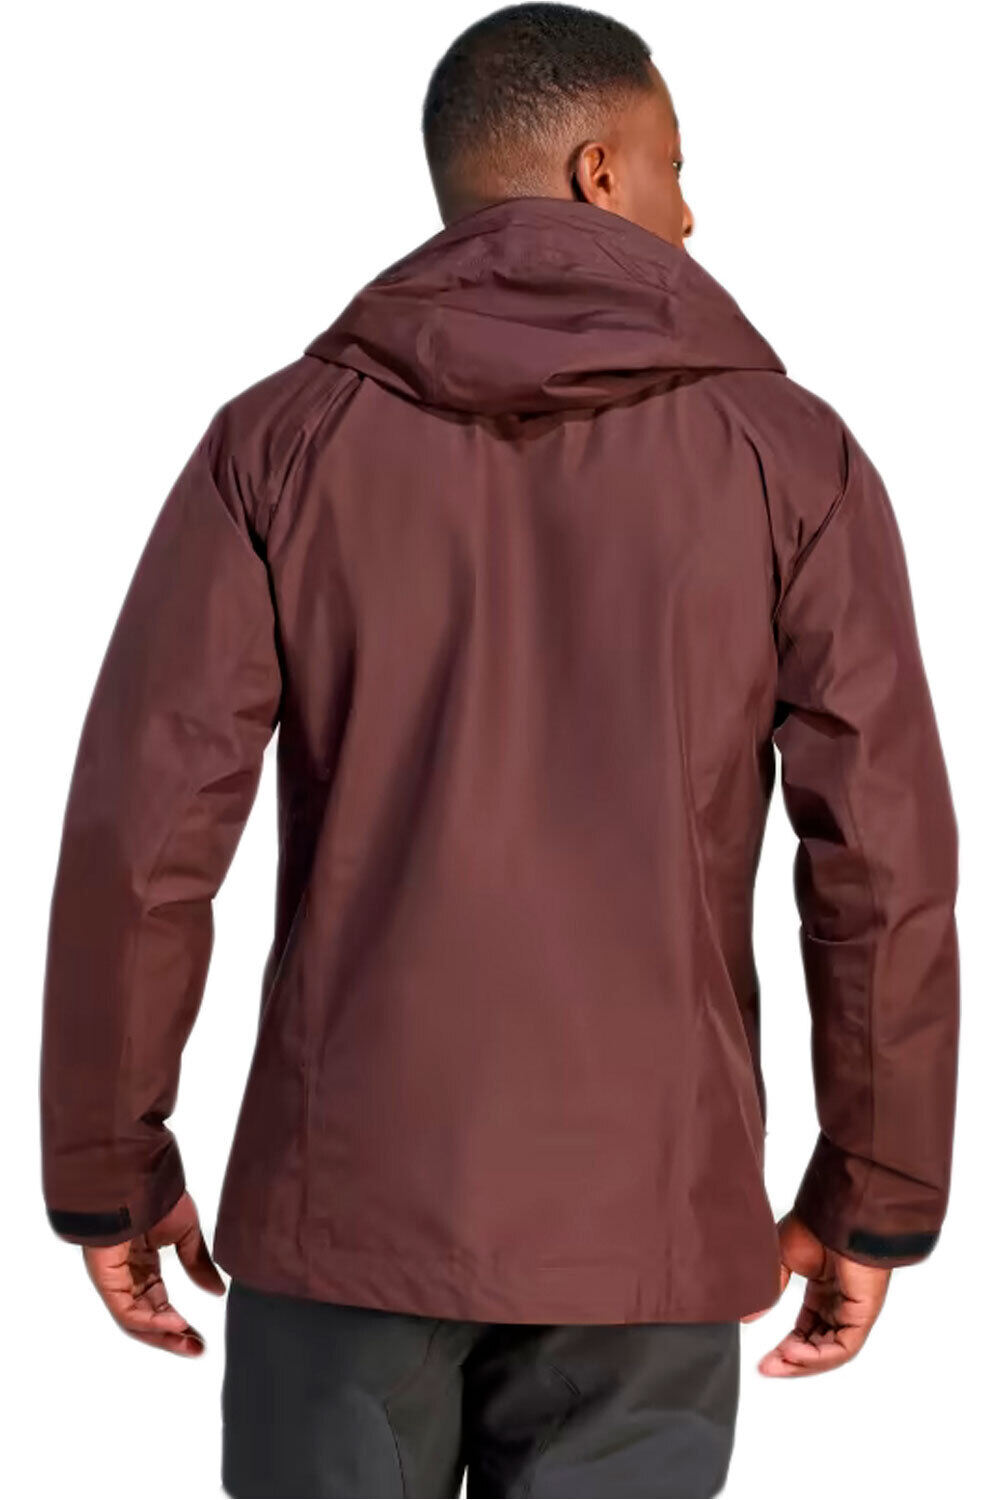 Comprar en oferta Adidas Man TERREX Xperior GORE-TEX Paclite Rain Jacket shadow brown (IB4260)